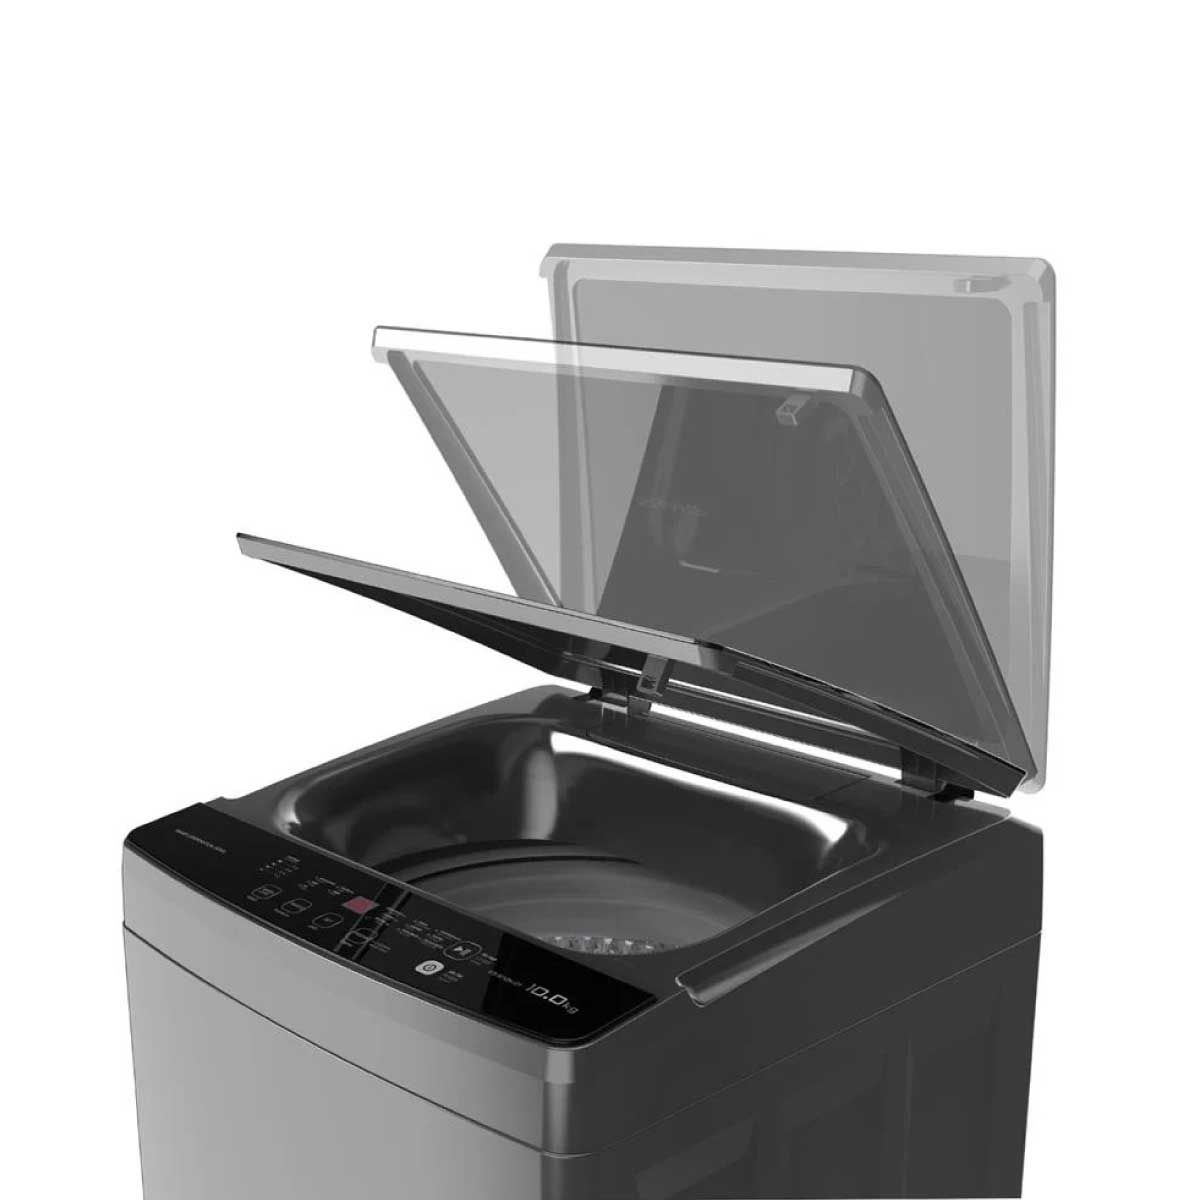 SHARP เครื่องซักผ้าฝาบน 10 Kg. สีเทา รุ่นES-W10N-GY